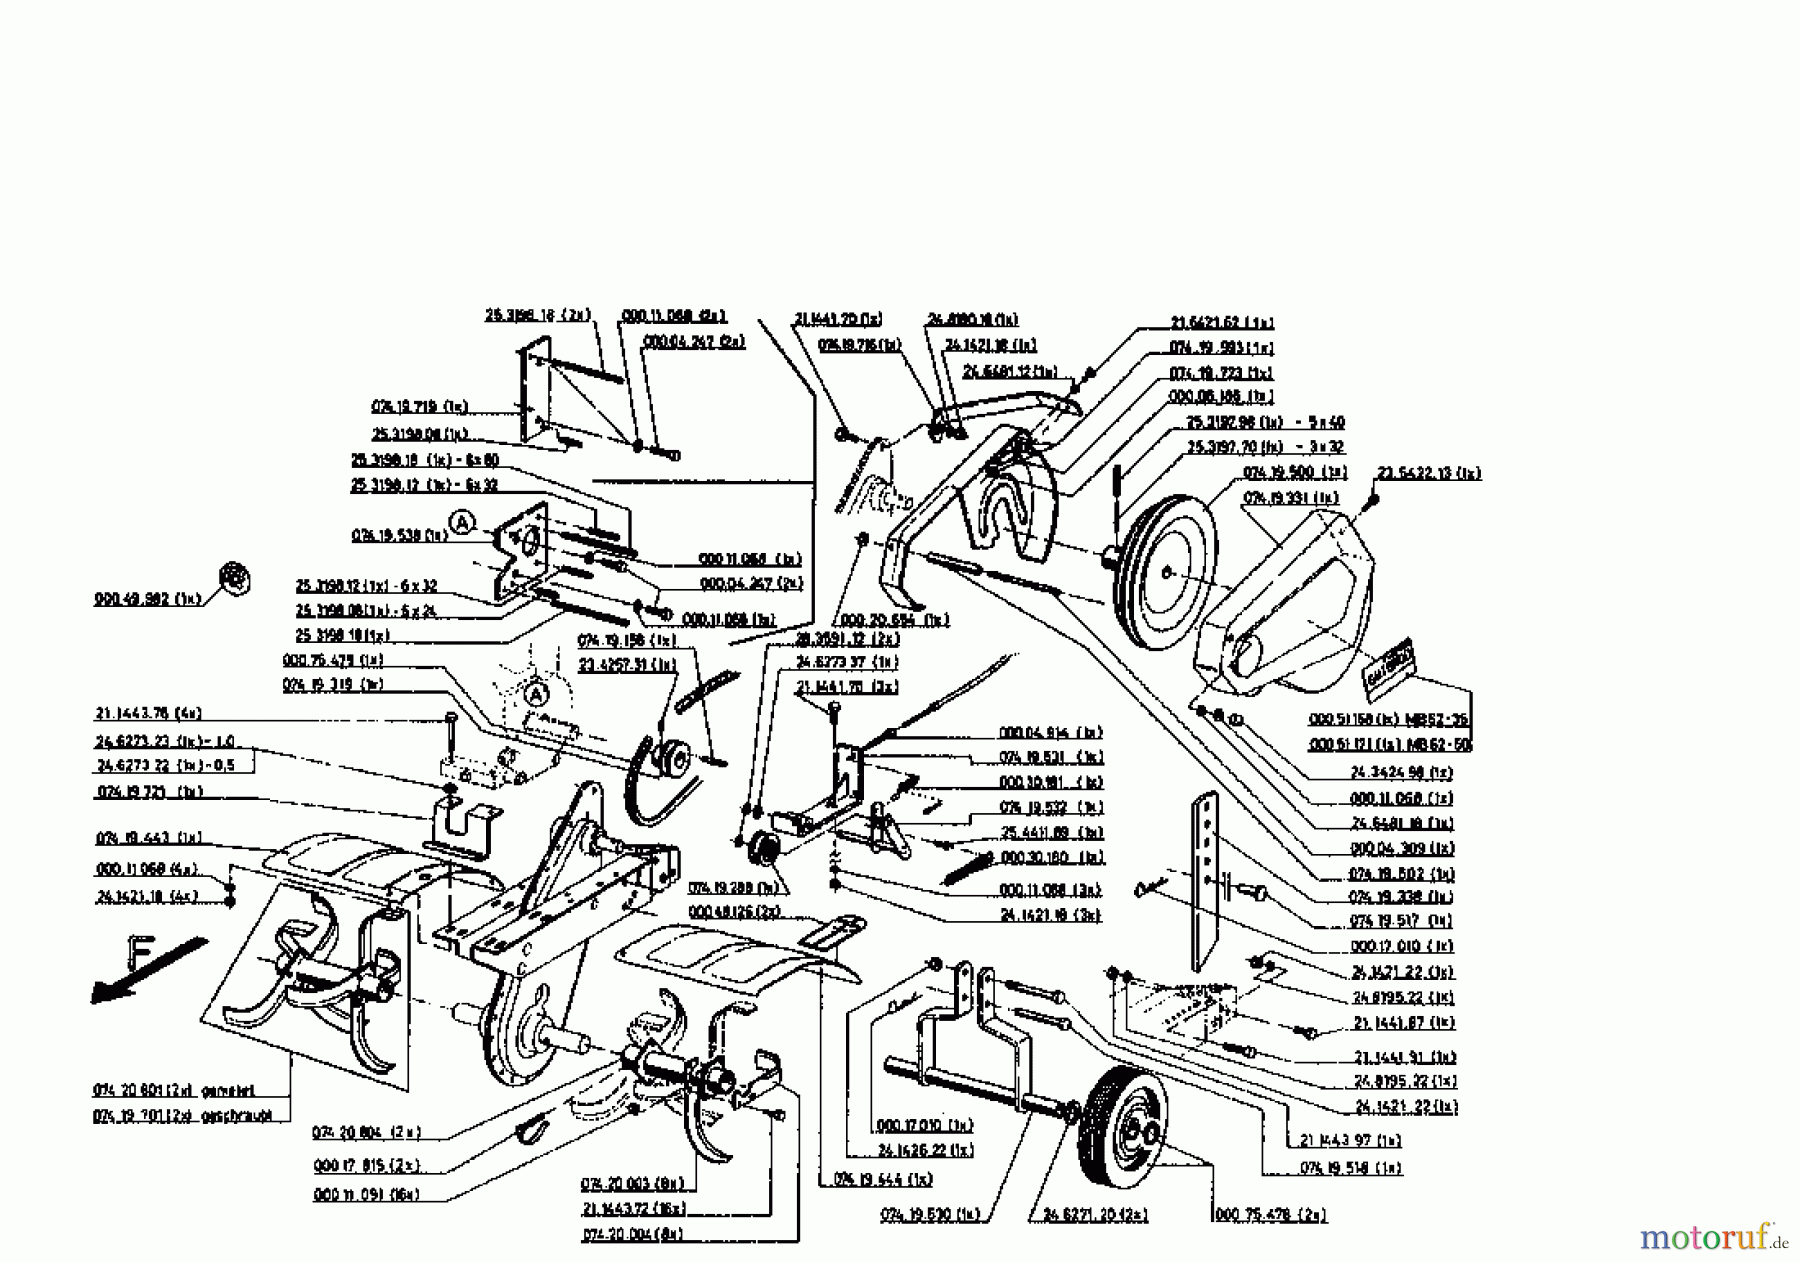  Gutbrod Motorhacken MB 62-35 07518.01  (1995) Grundgerät